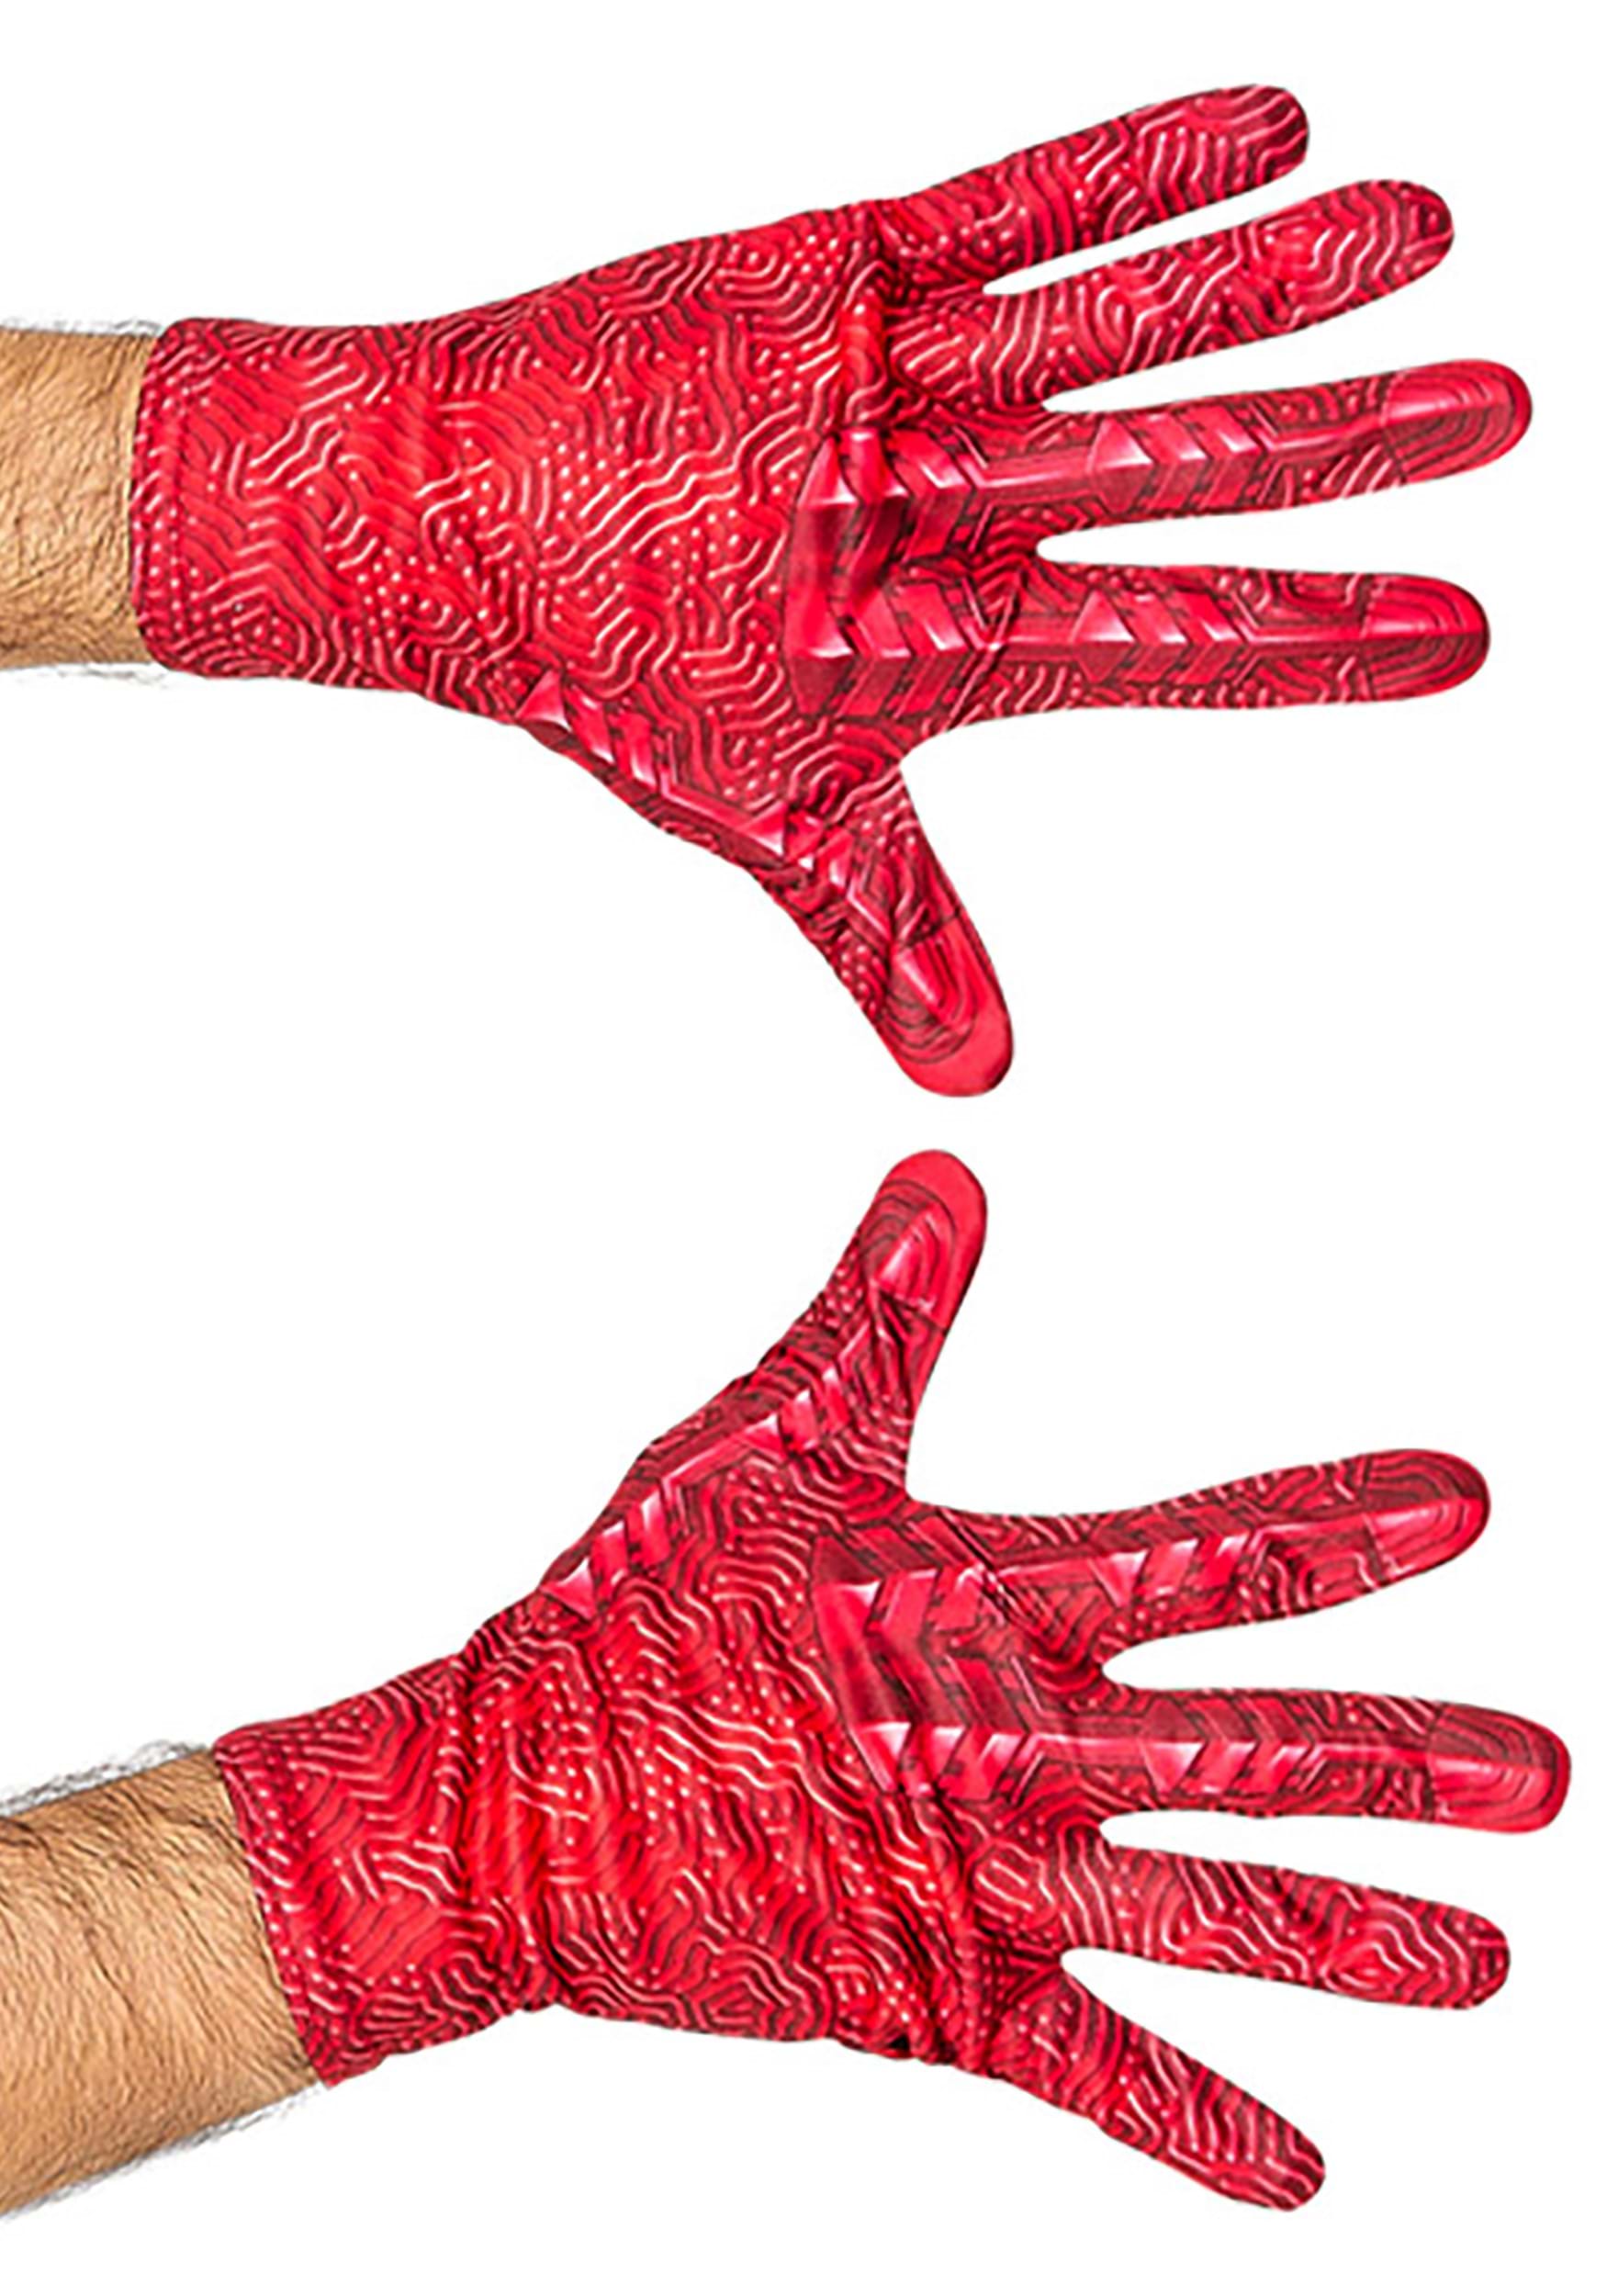 The Flash Men's Gloves